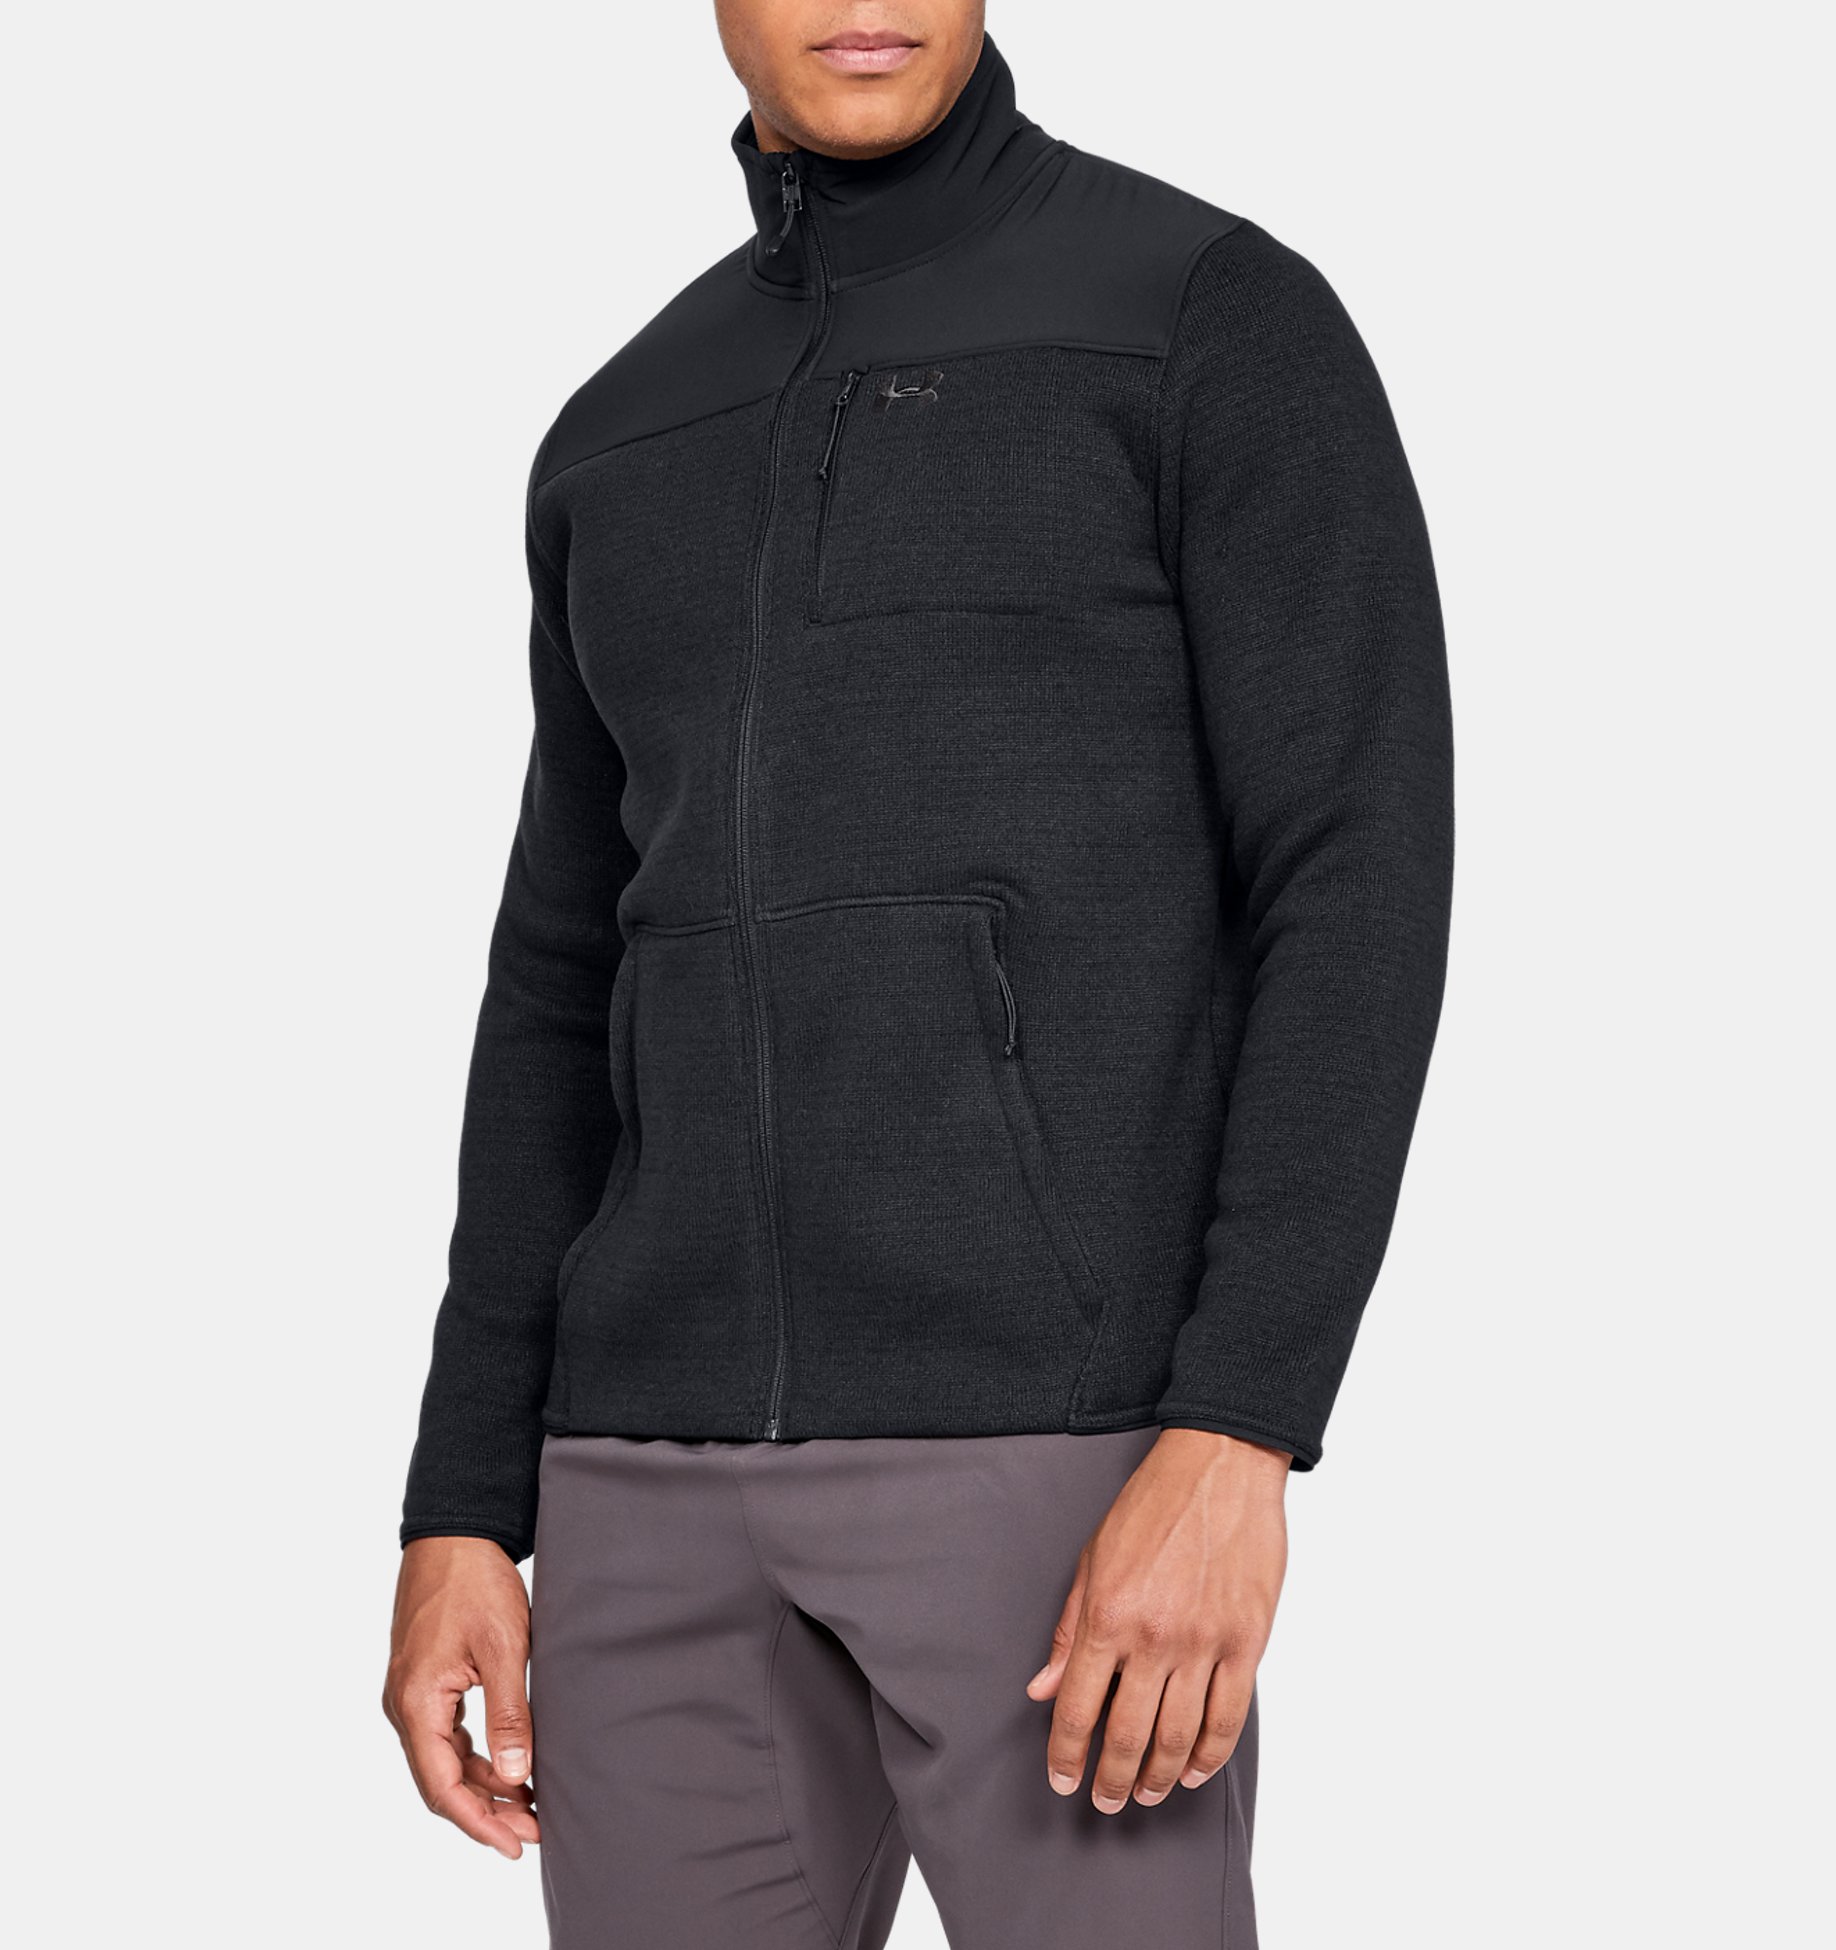 MEN FASHION Jumpers & Sweatshirts Fleece Black XL discount 72% Millet sweatshirt 